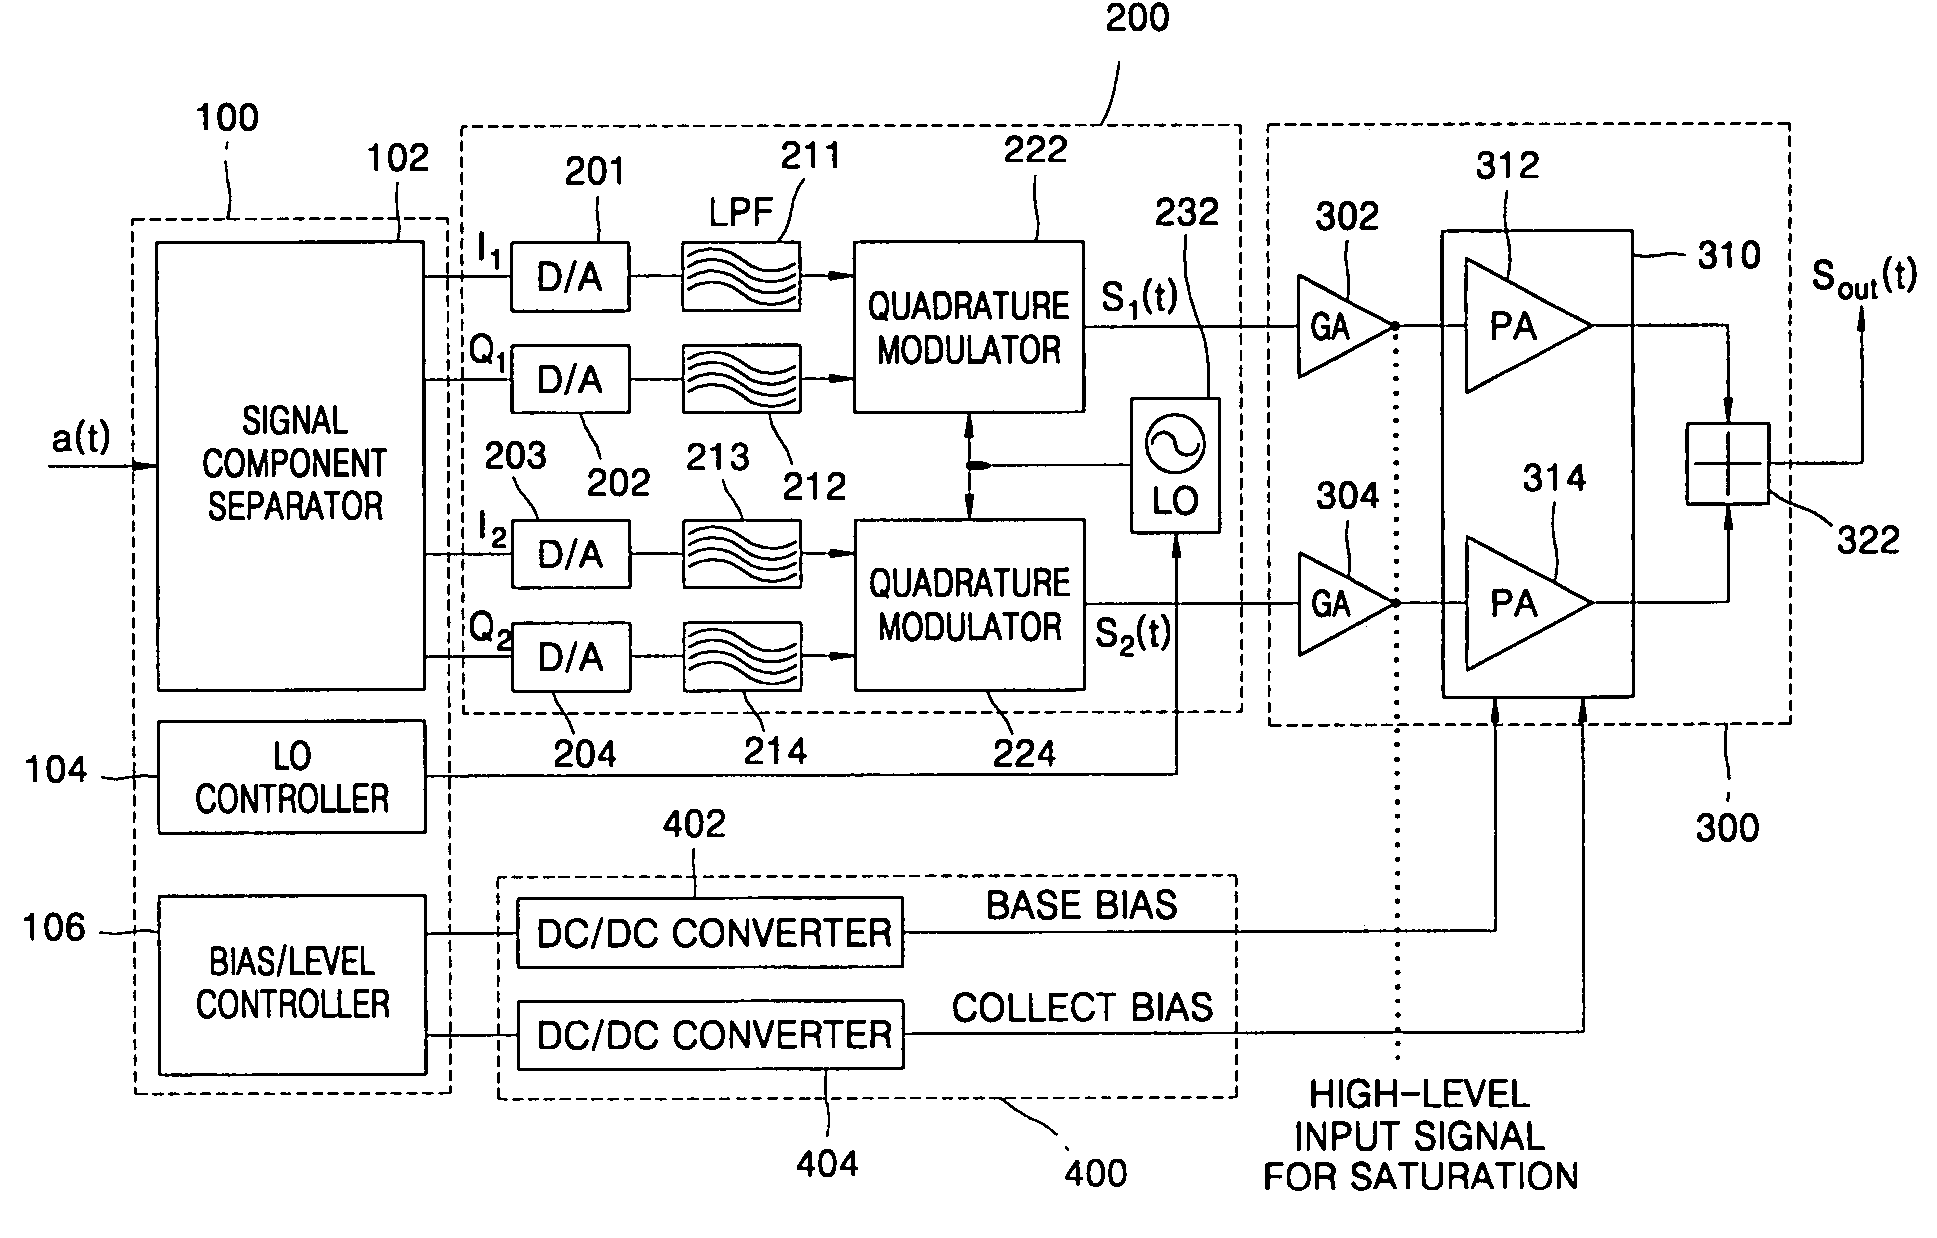 LINC power transmitter